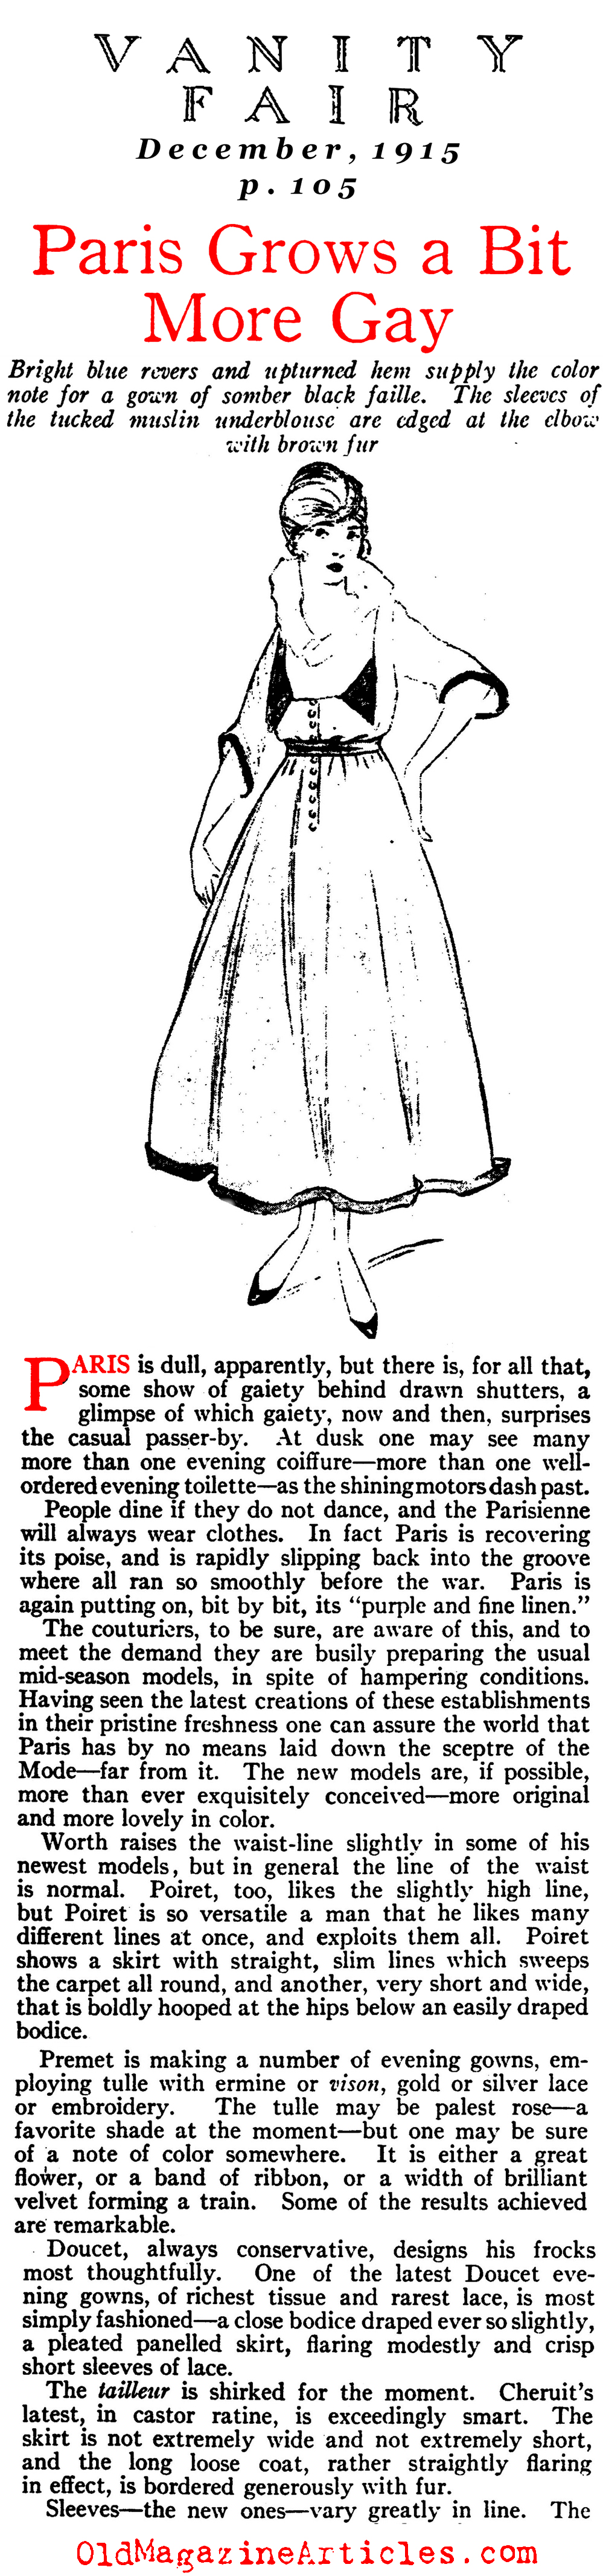 Paris Fashion: Spring, 1915  (Vanity Fair, 1915)